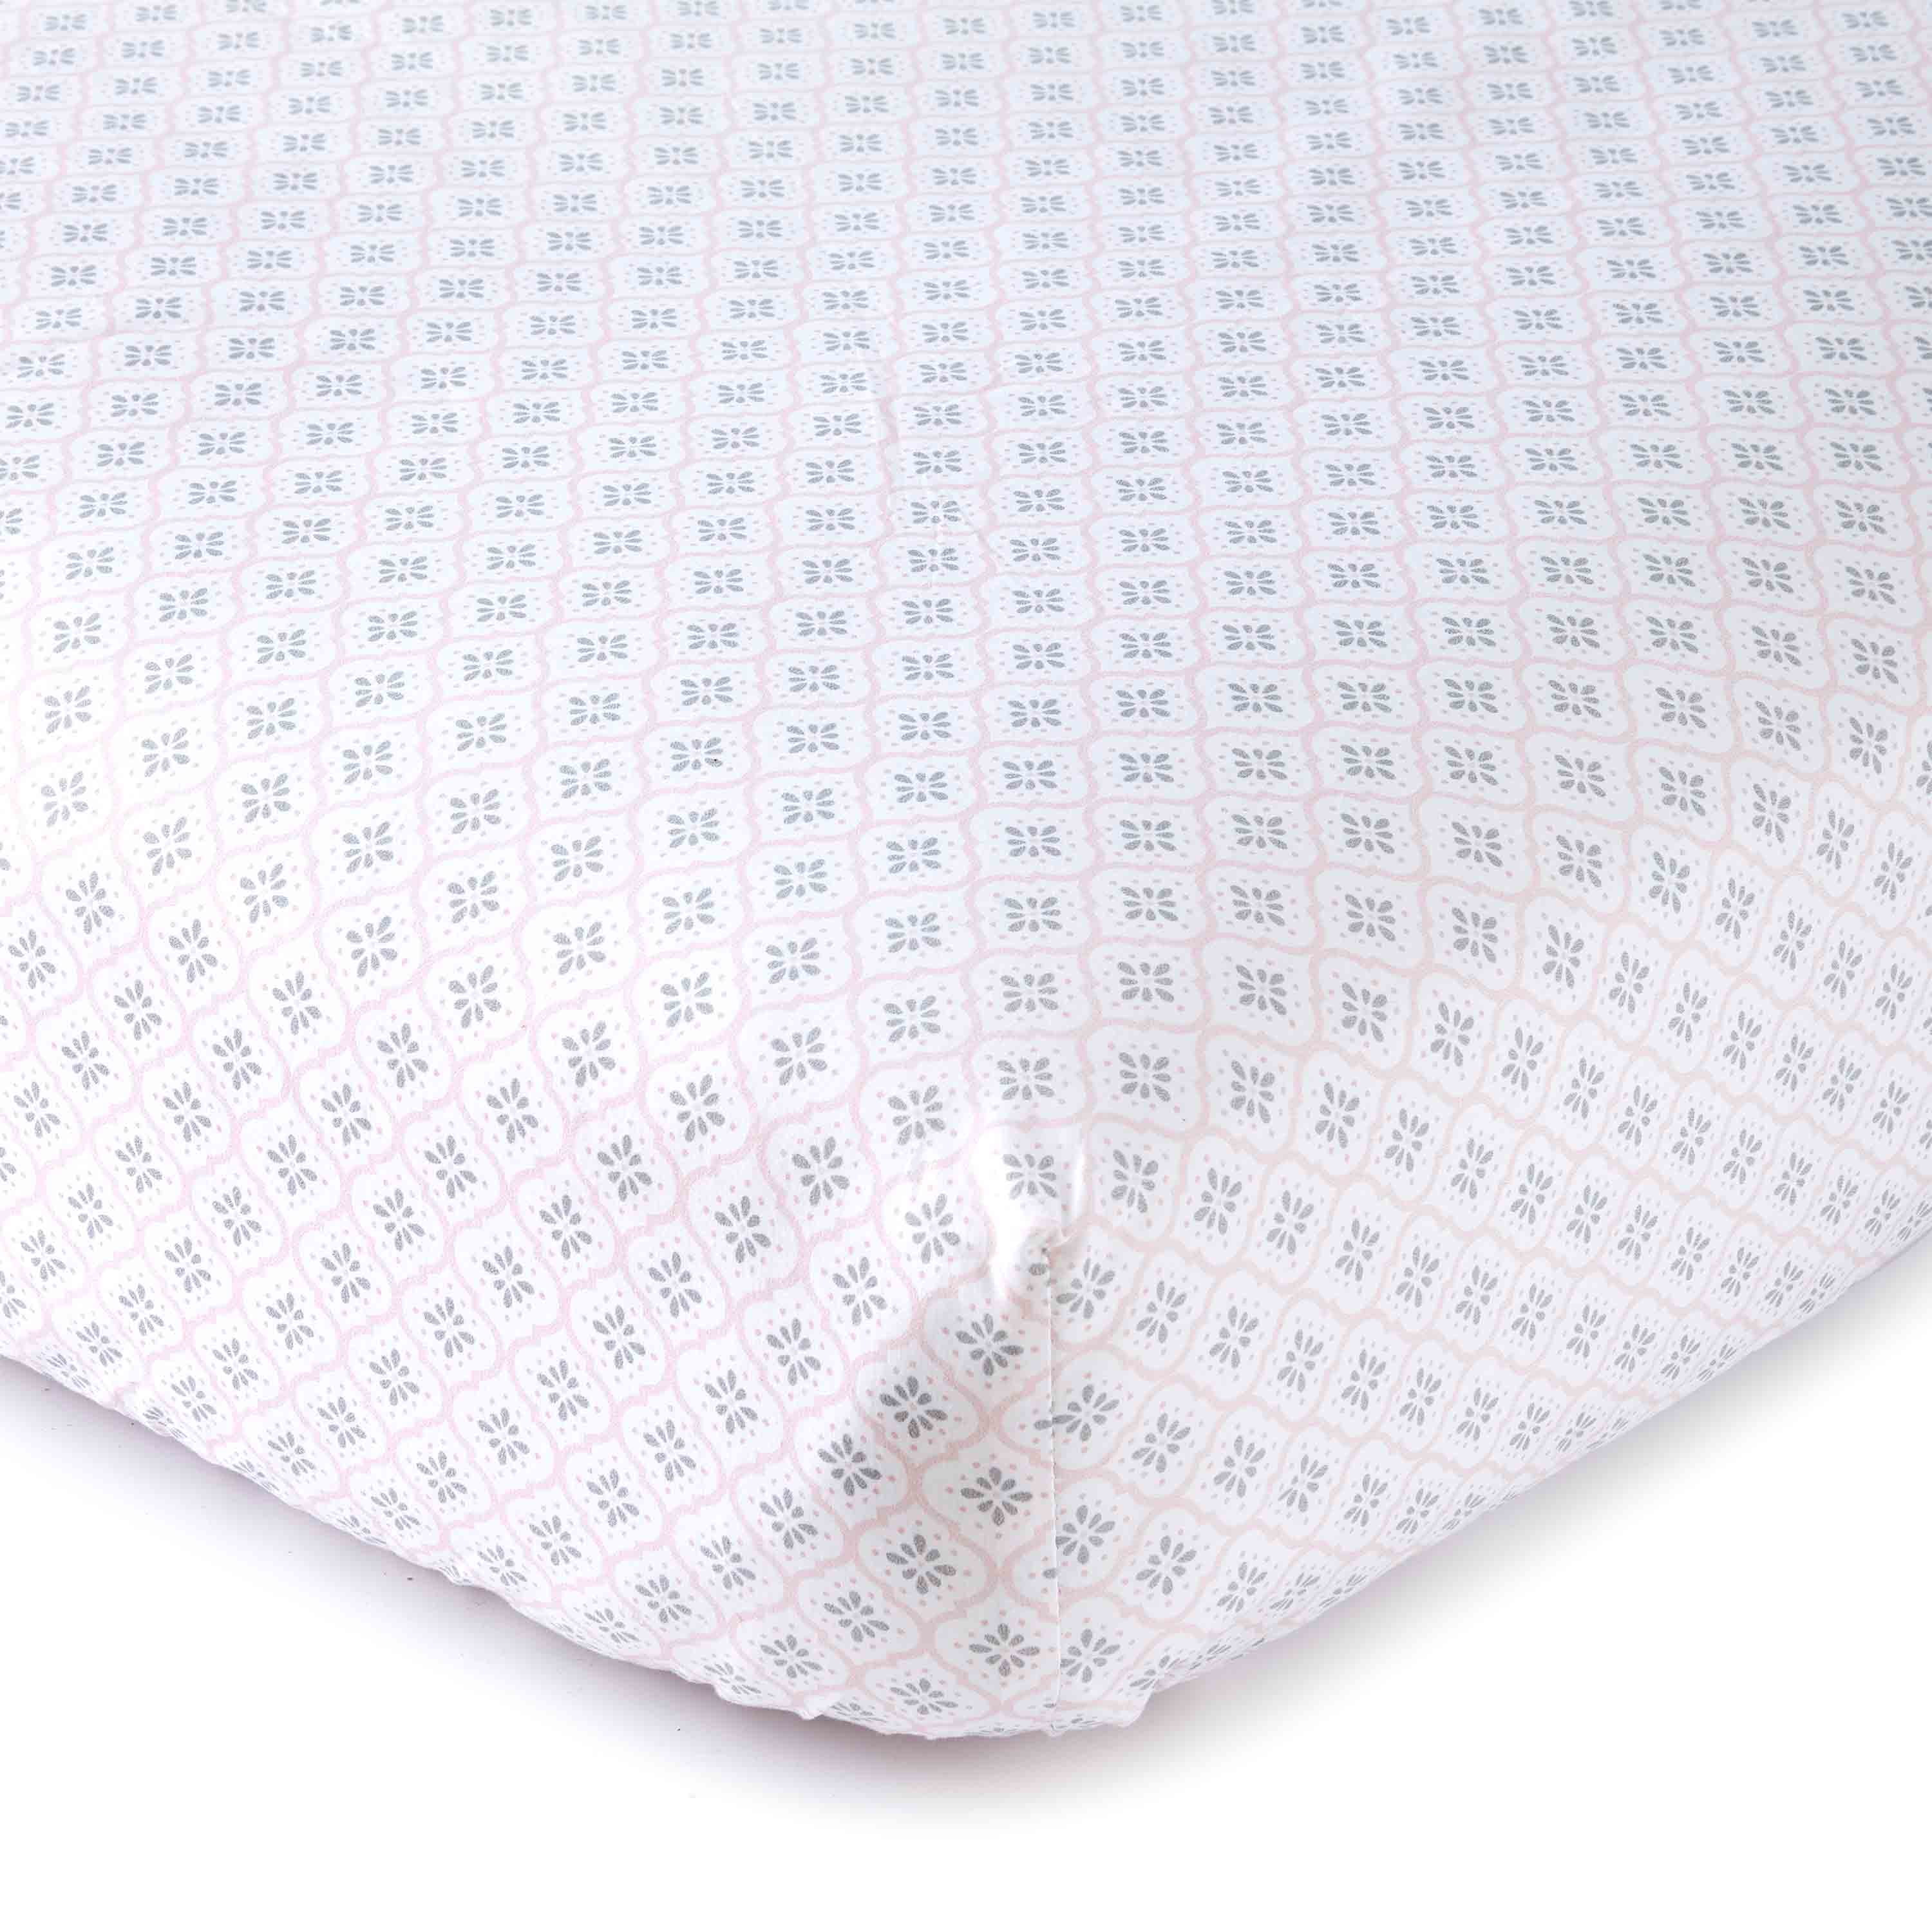 Circo Gray Dot Fitted Crib Sheet Toddler Bed Sheet cotton white gray dot new 